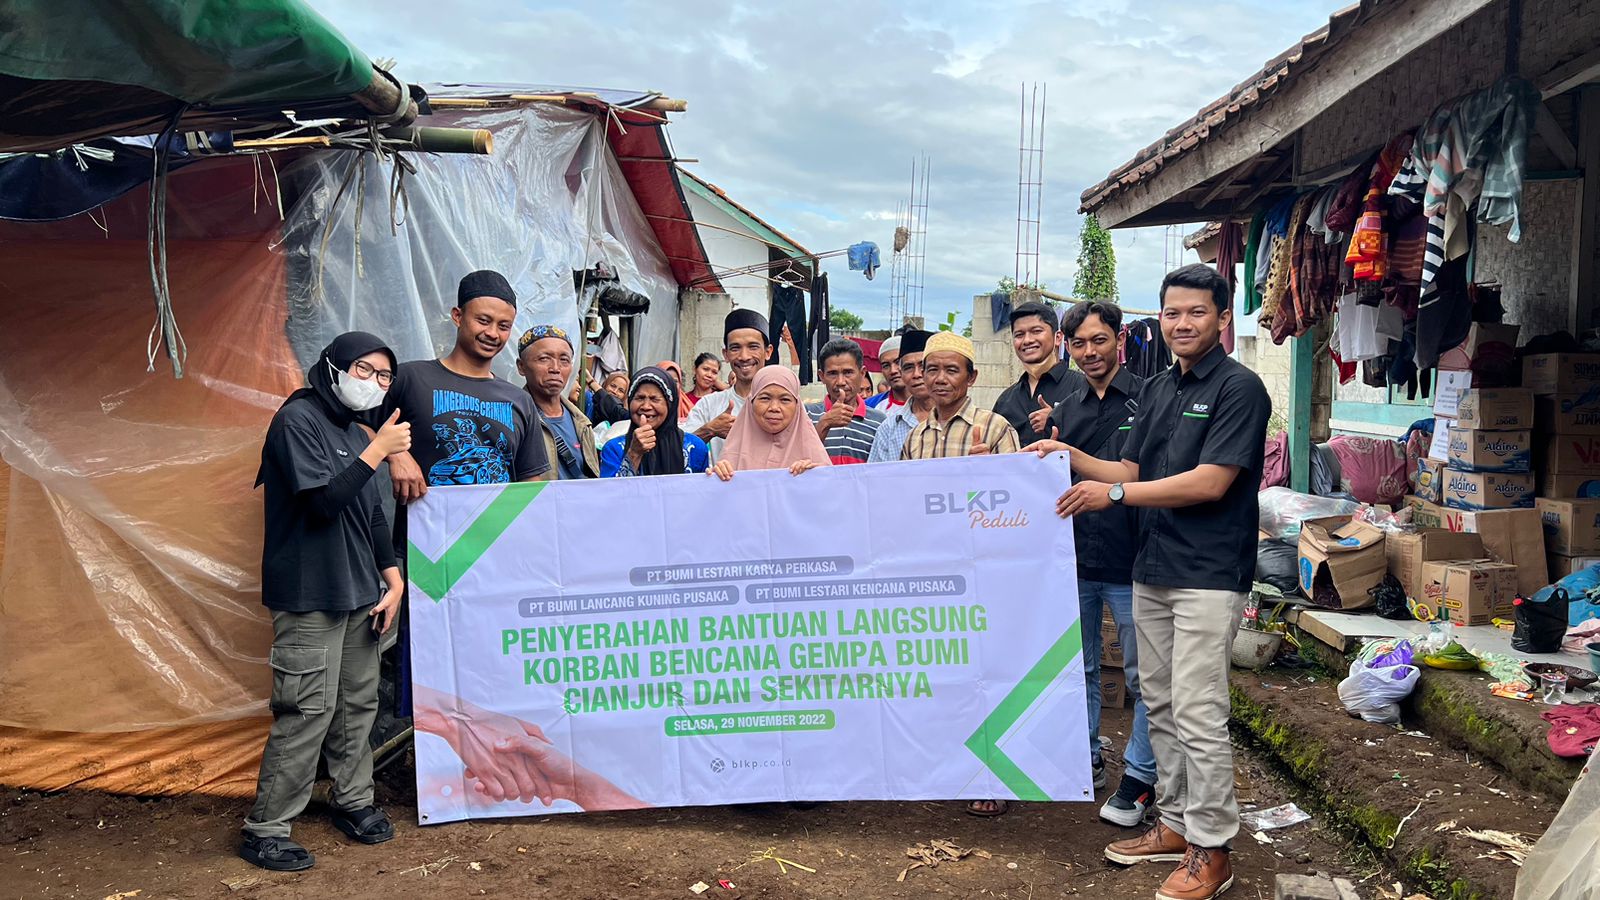 Wujudkan Kepedulian, Manajemen dan Karyawan PT BLKP Galang Donasi untuk Korban Gempa Cianjur